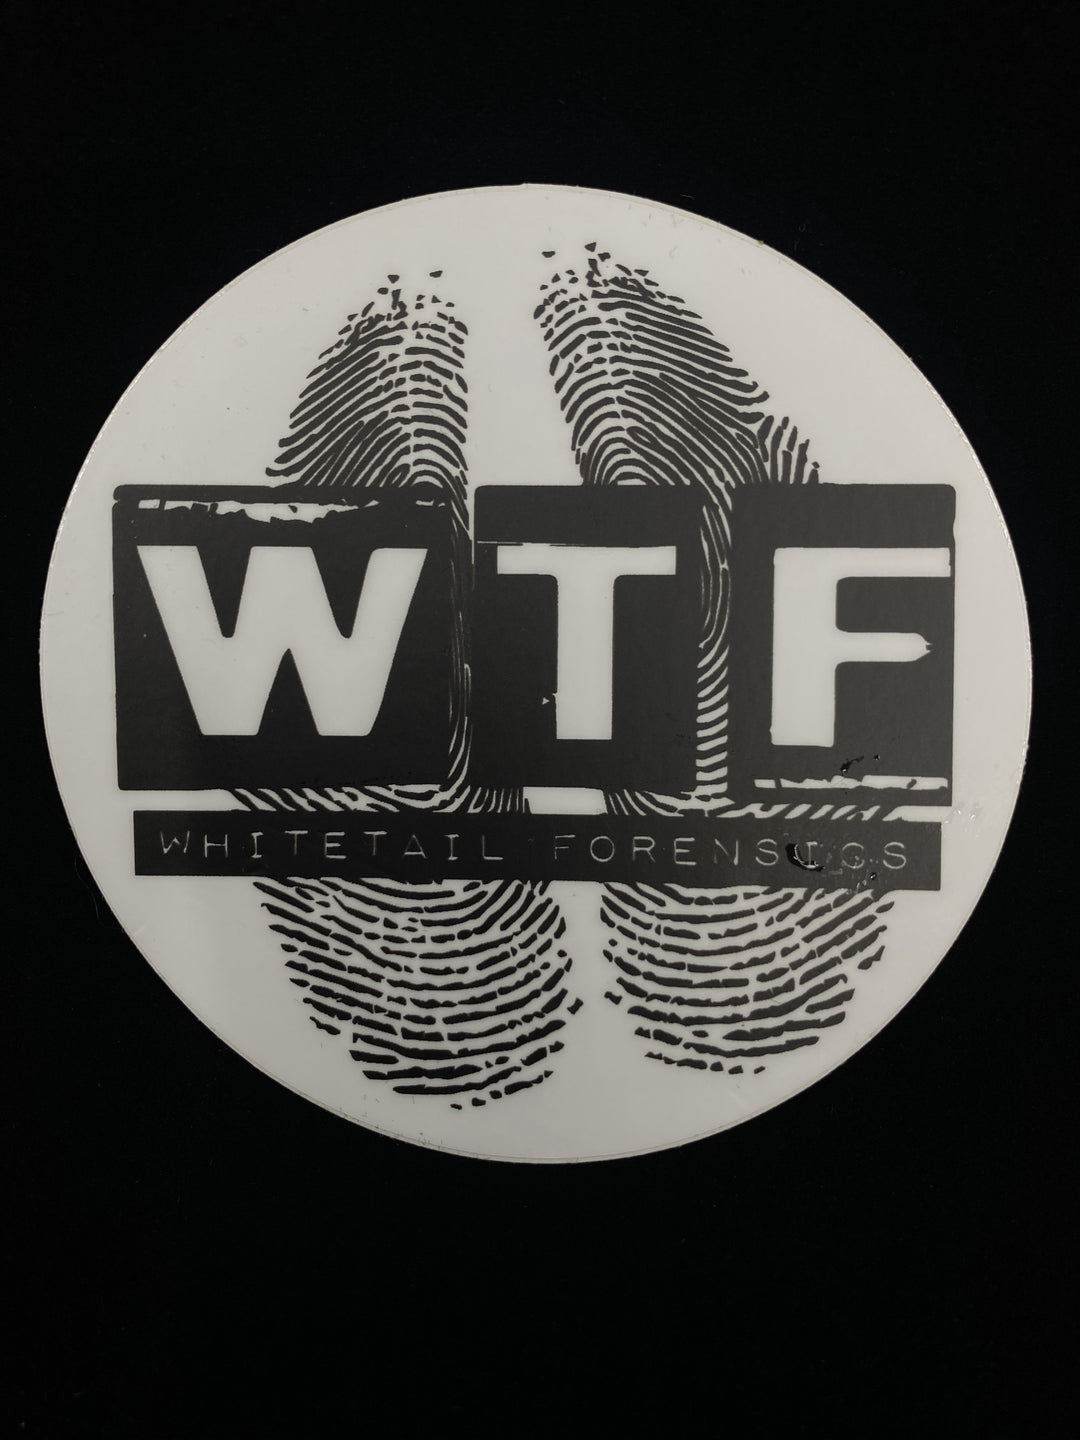 WhiteTail Forensics 3" Round Vinyl Decal - WhiteTail Forensics